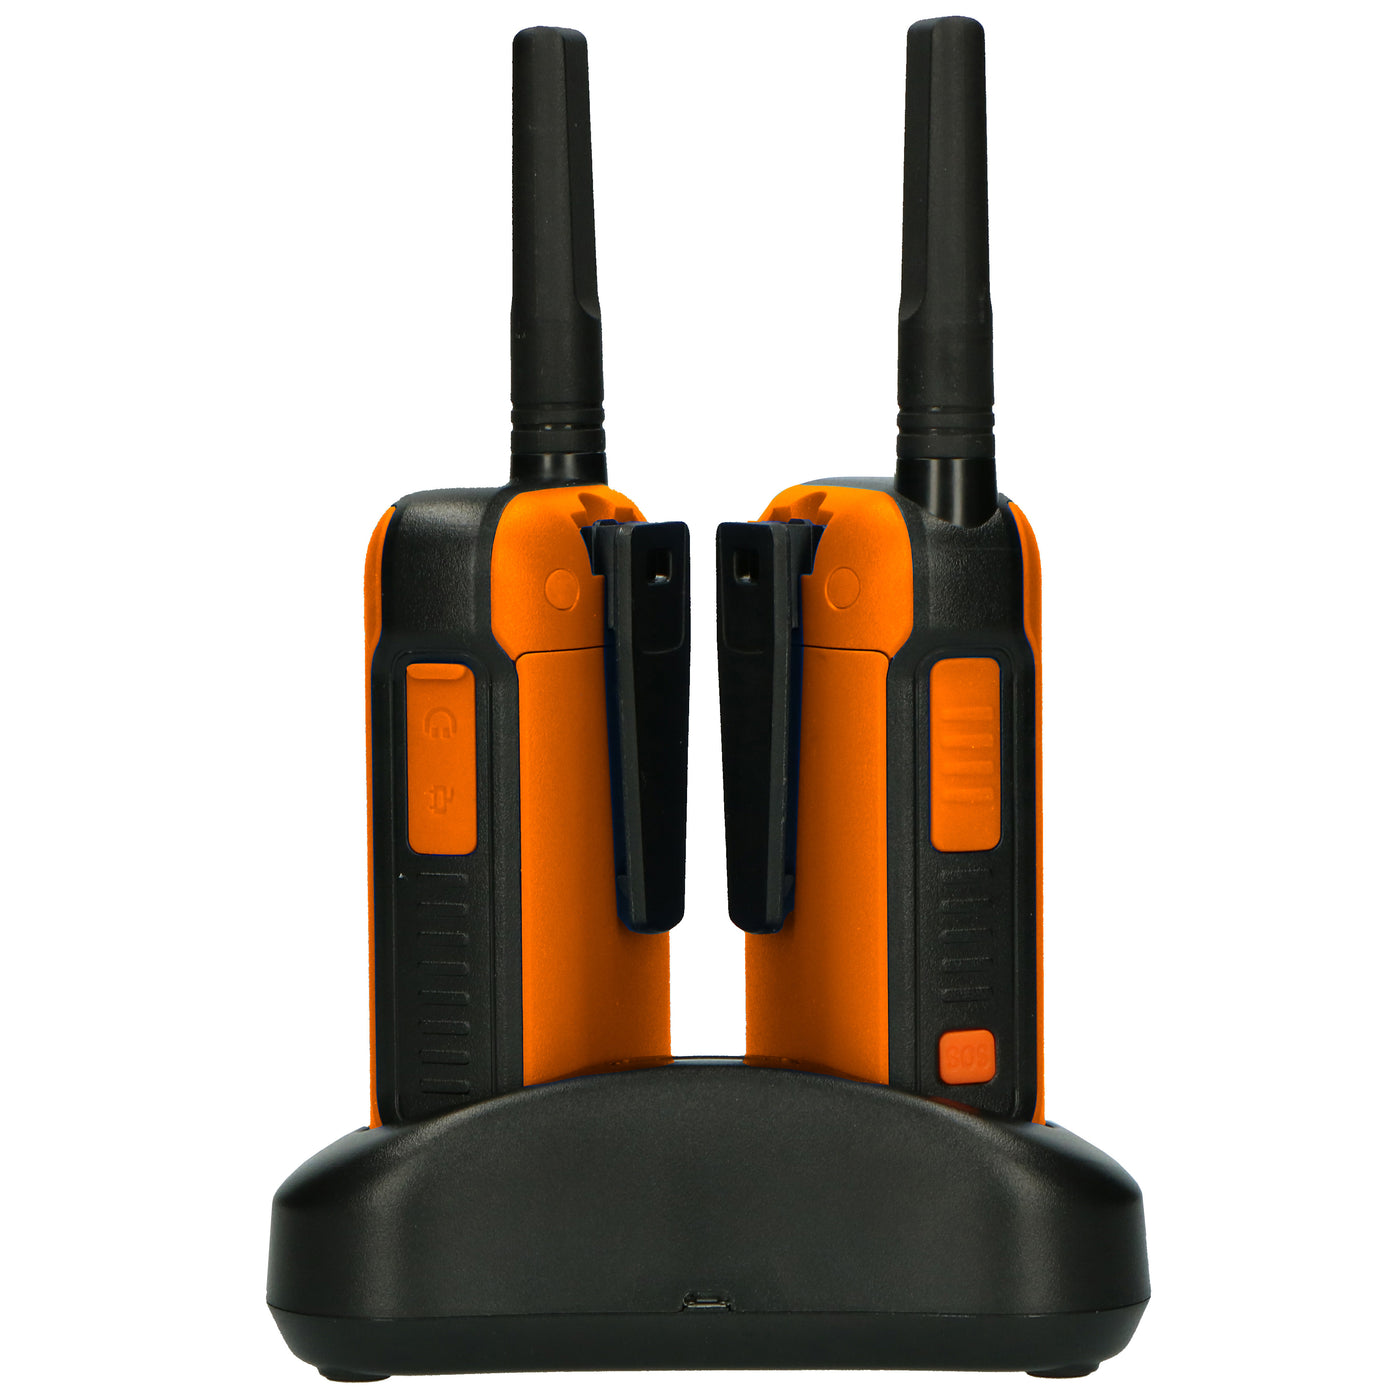 Alecto FR300OE - Robuuste walkie talkie, tot 10 kilometer bereik, oranje/zwart